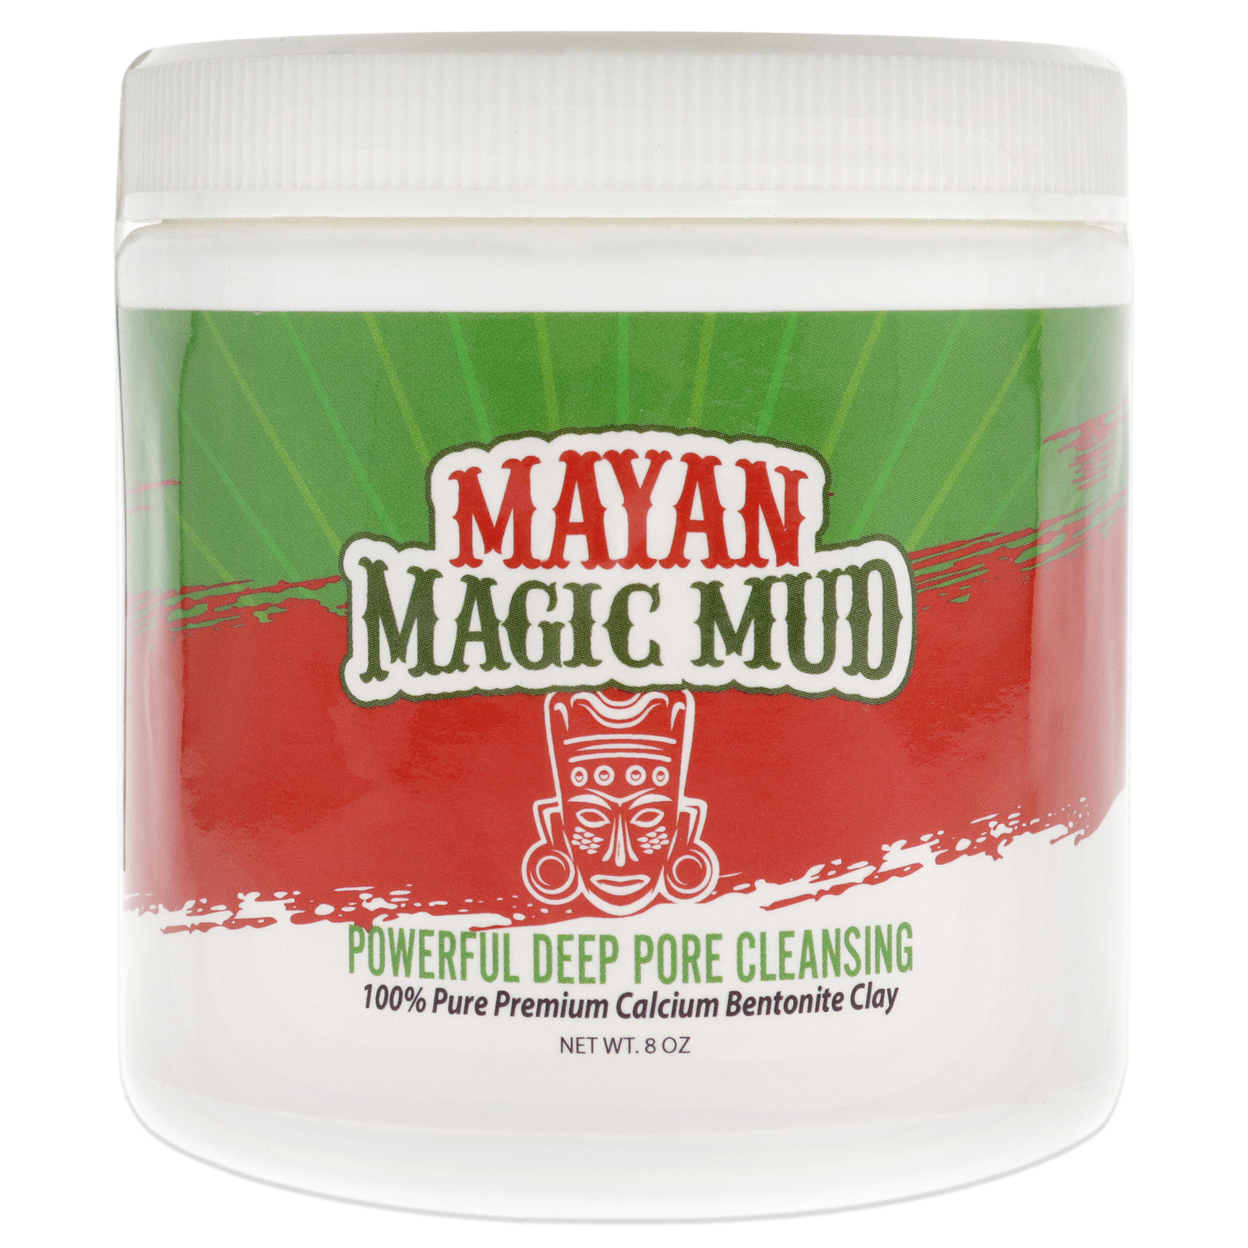 Mayan Magic Mud Powerful Deep Pore Cleansing Clay Cleanser 8 Oz